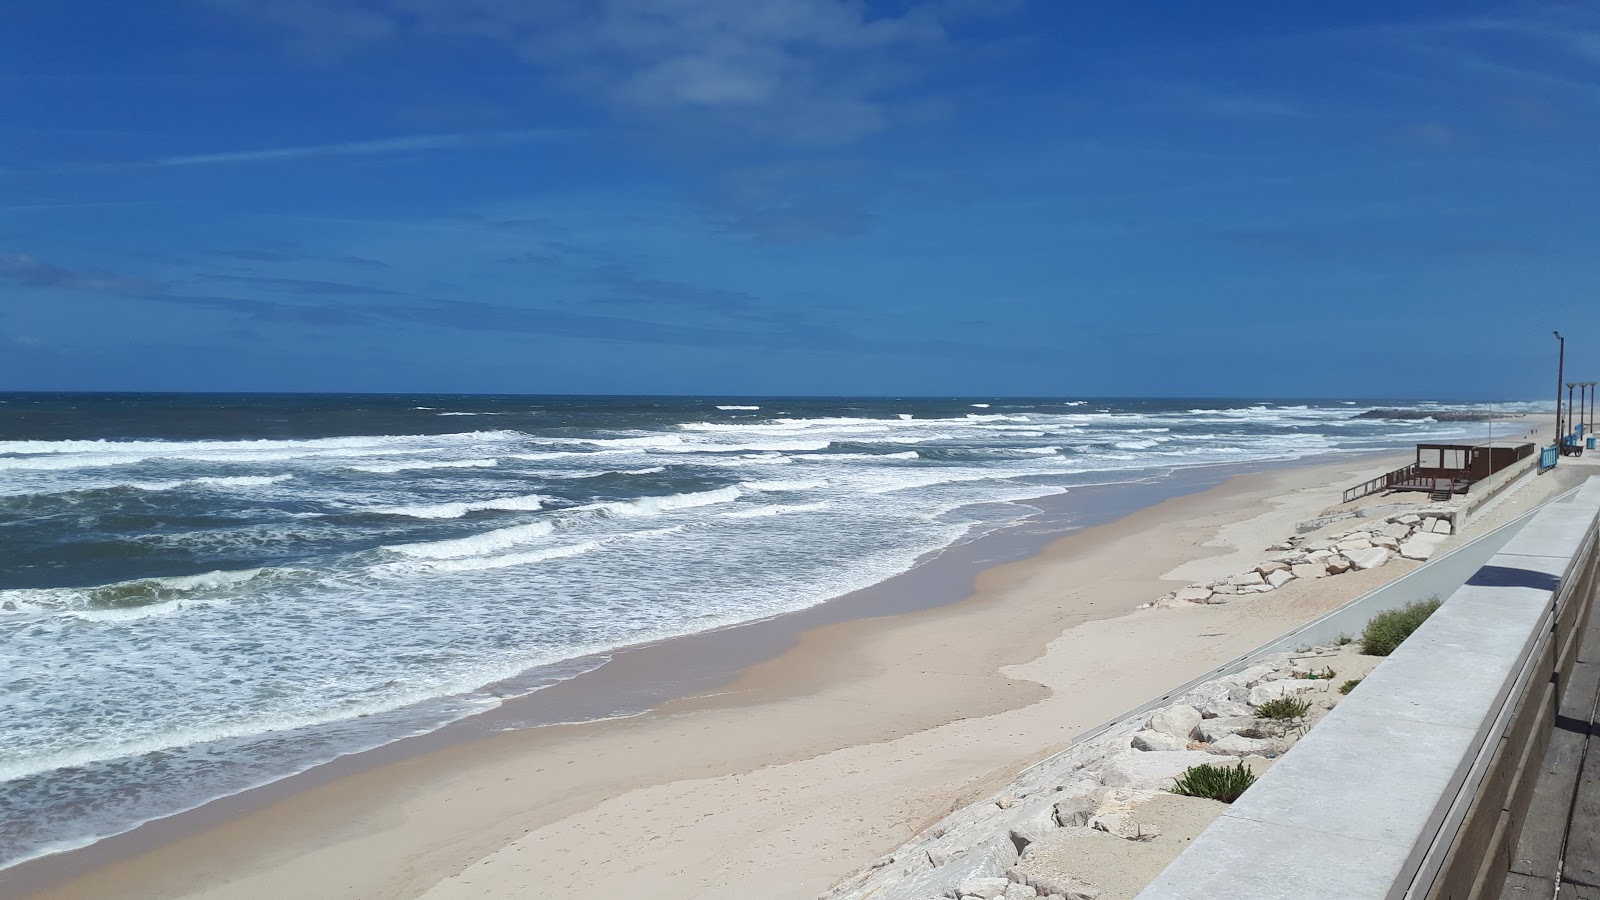 Photo of Praia da Vieira - popular place among relax connoisseurs